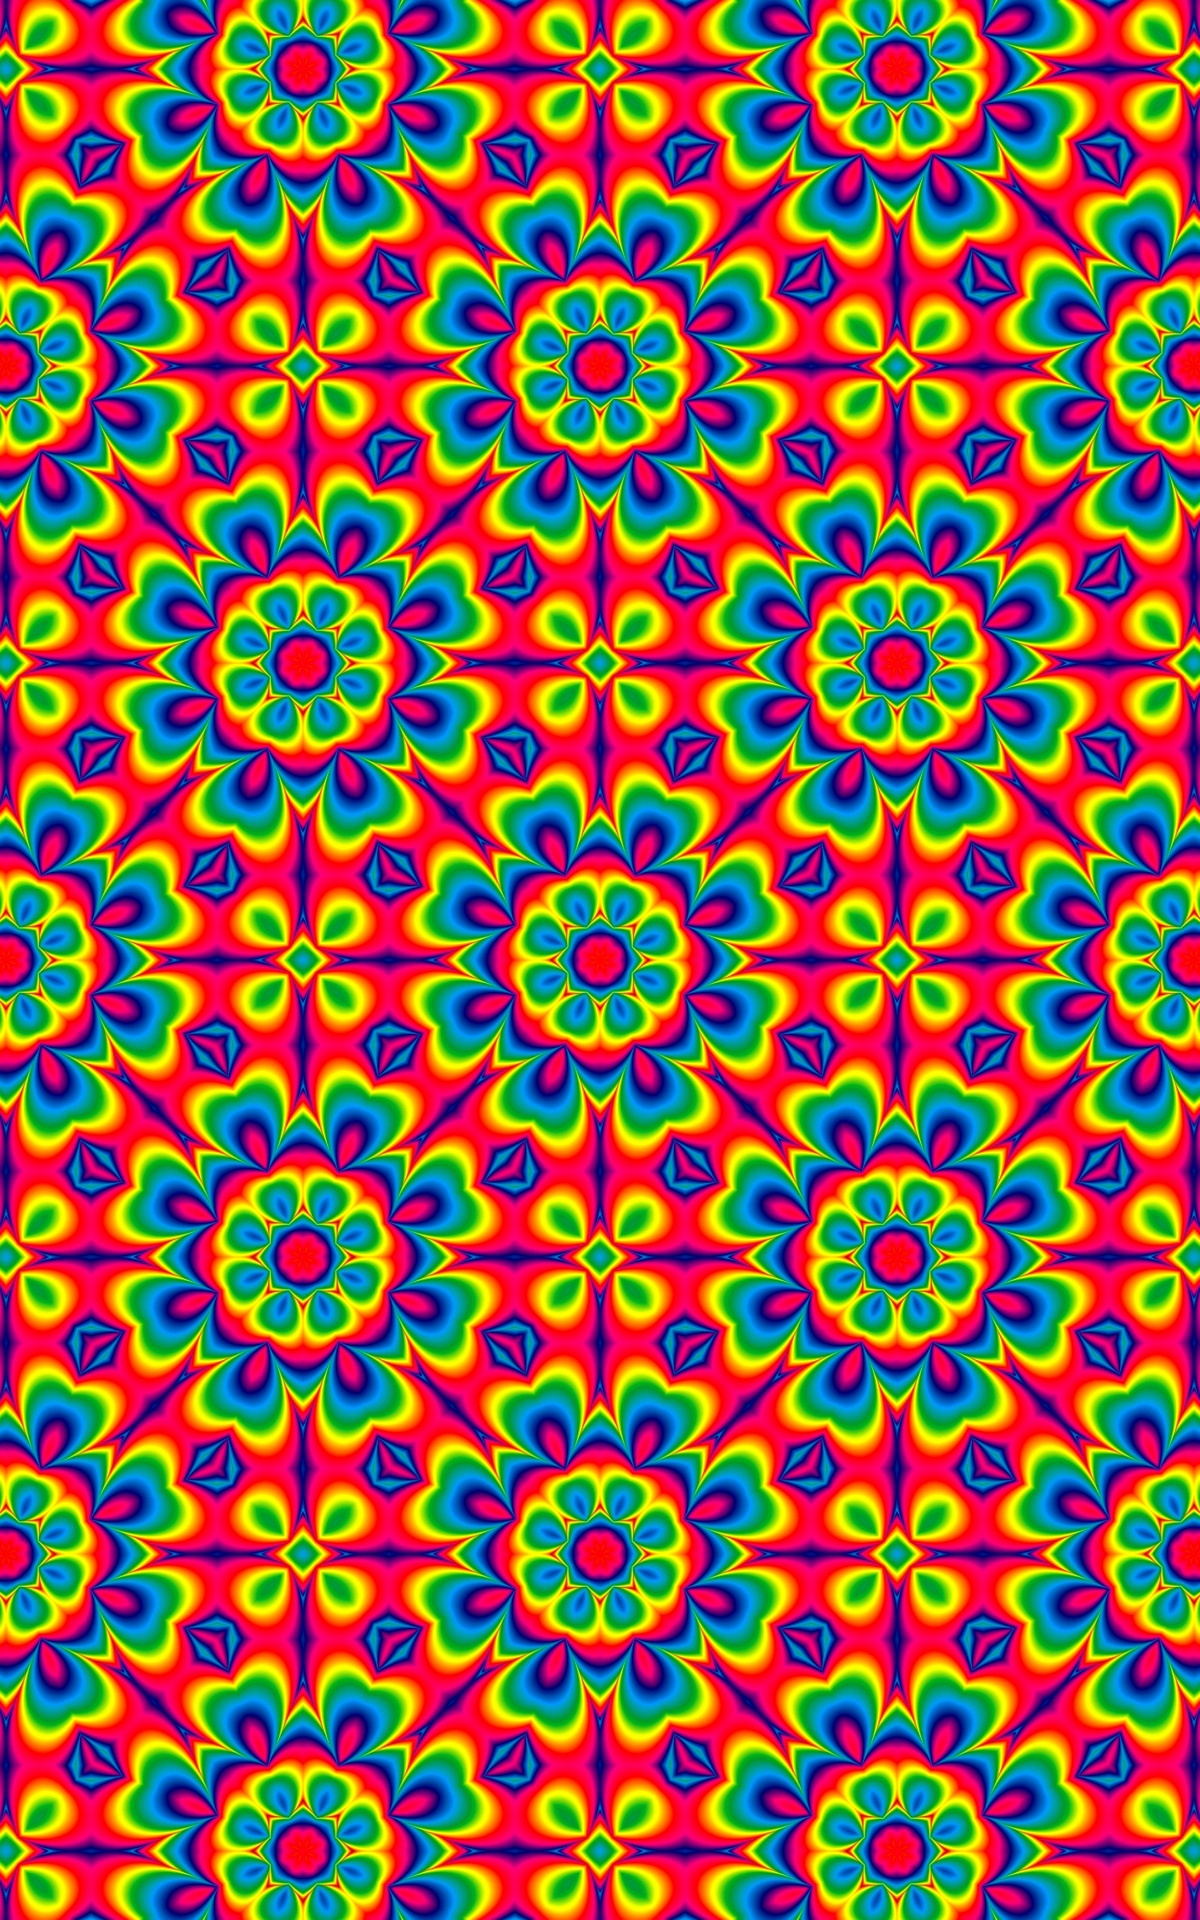 Mandala pattern background texture paper fantasy graphic design colors colorful ornamental mosaic wallpaper